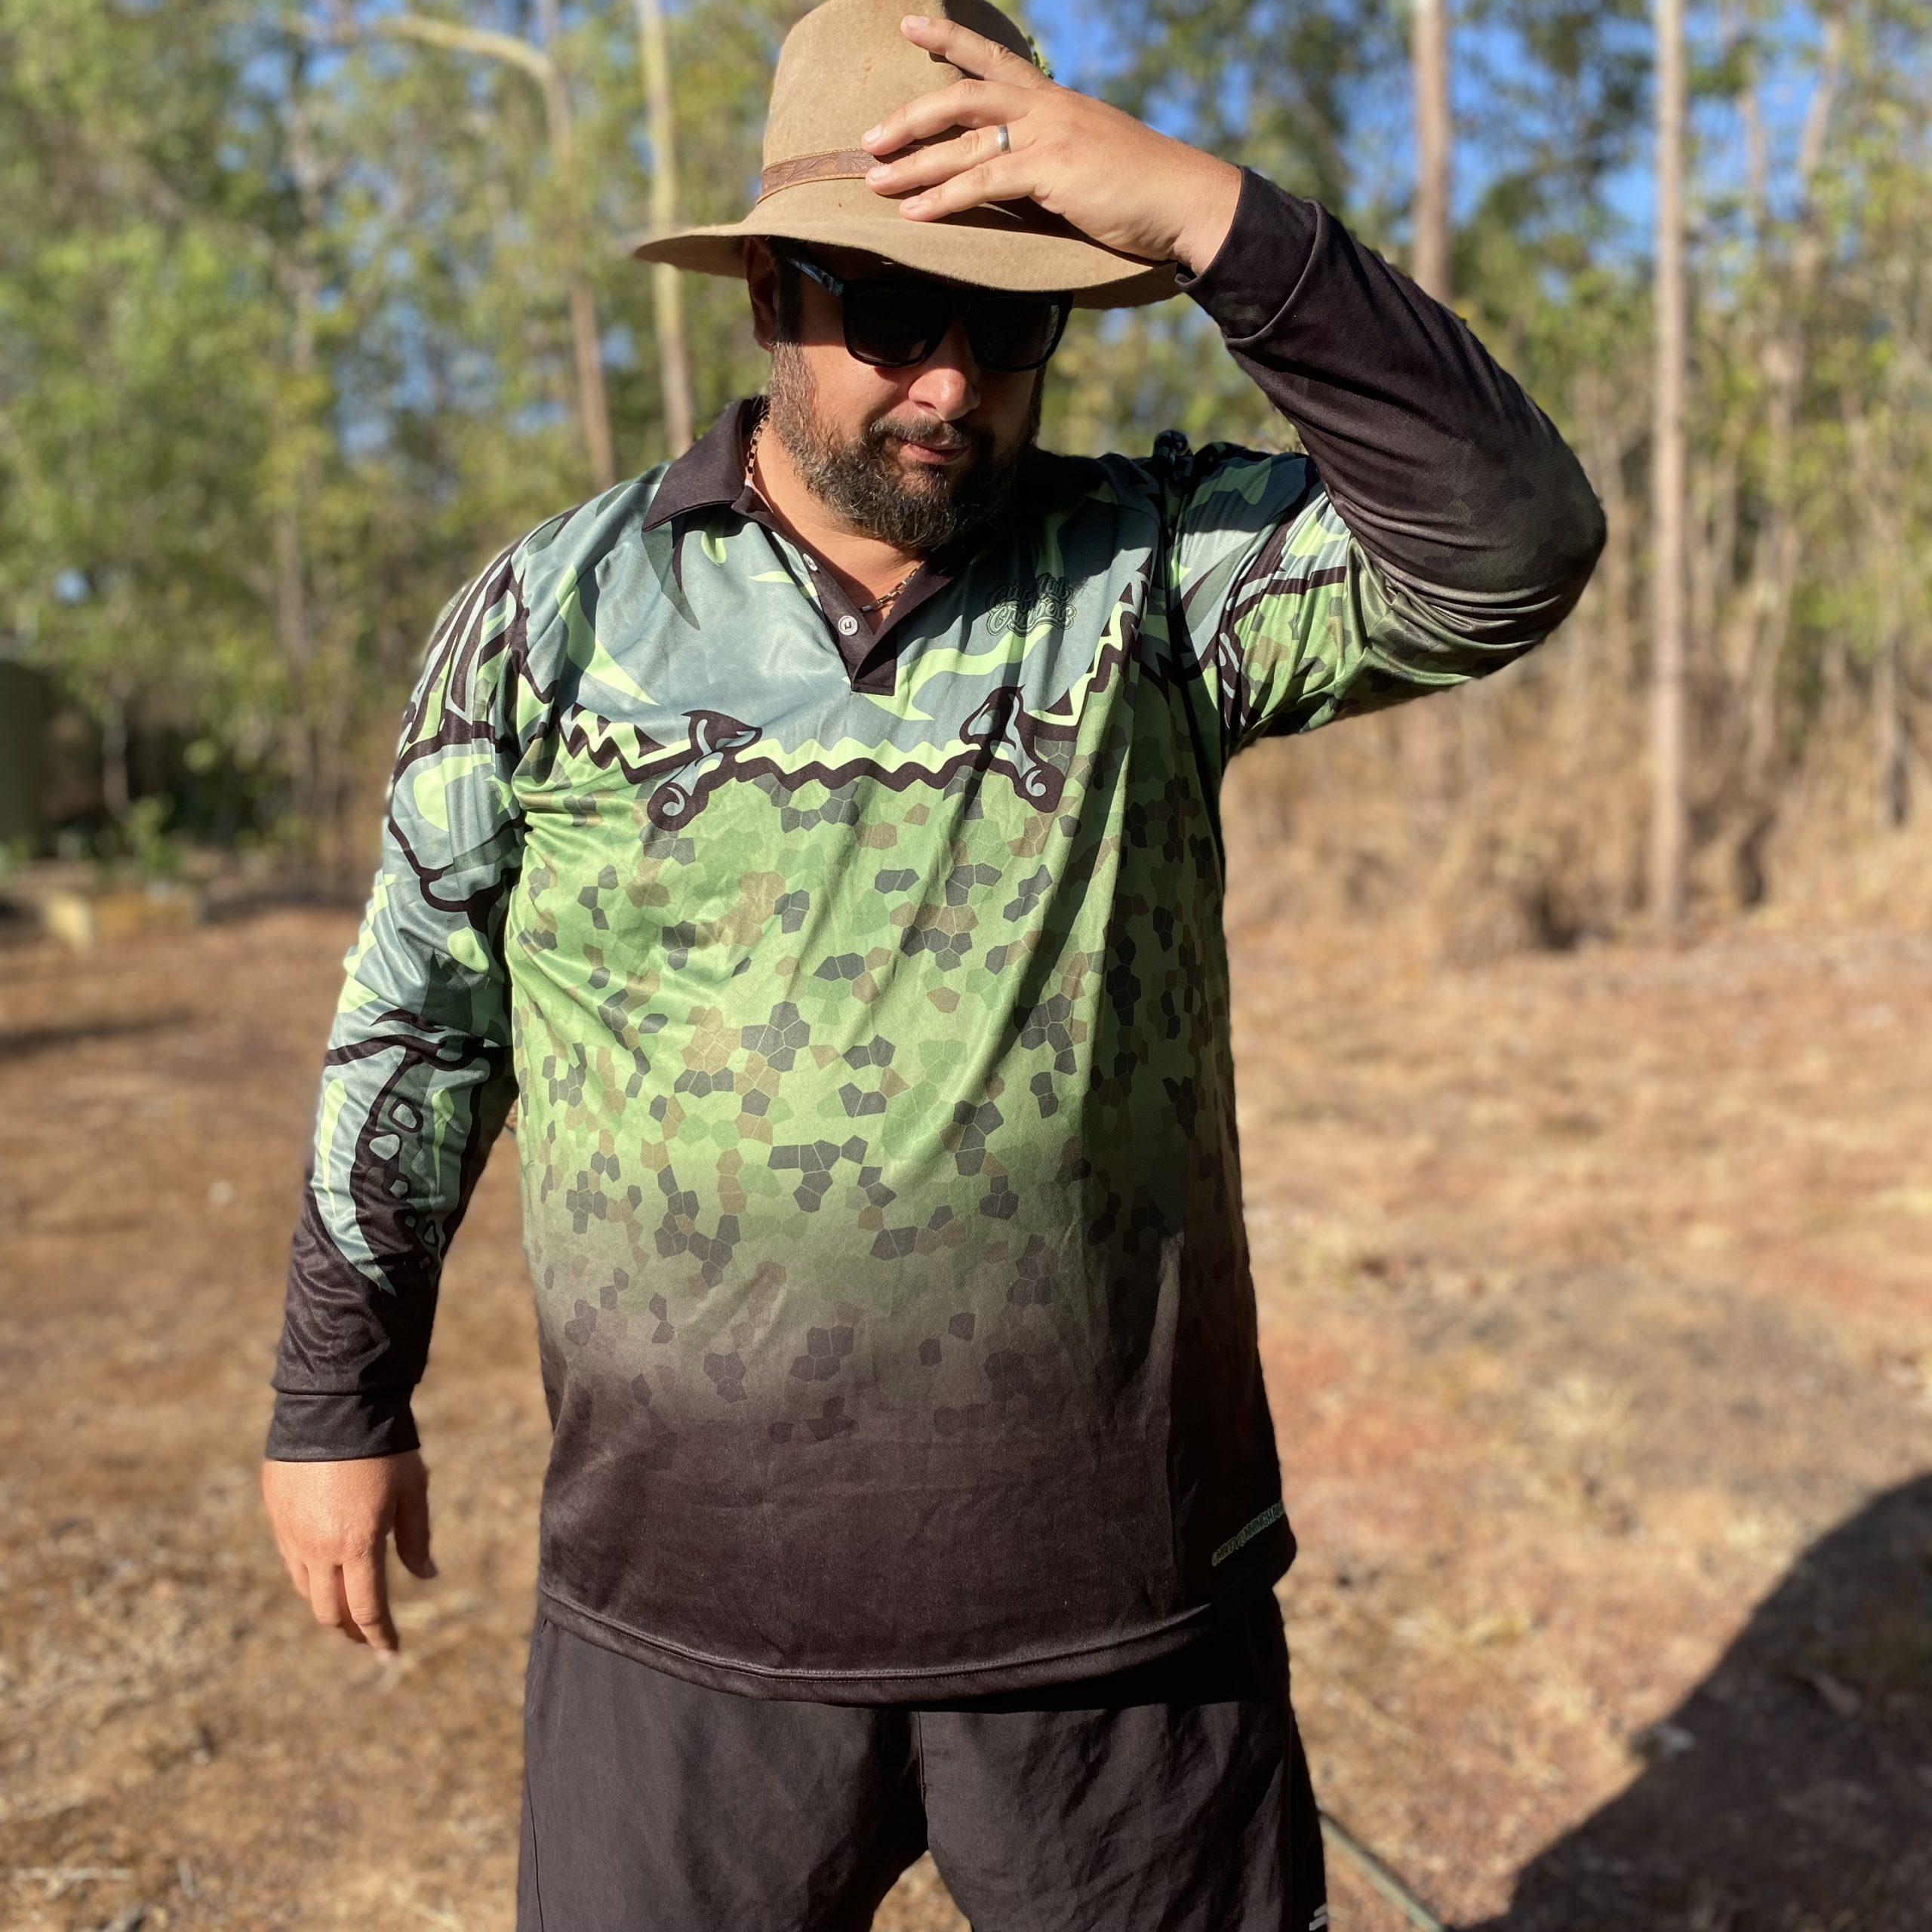 Gulf Mud Crabbers” Fishing Shirt (Green) – Mikey Cunningham